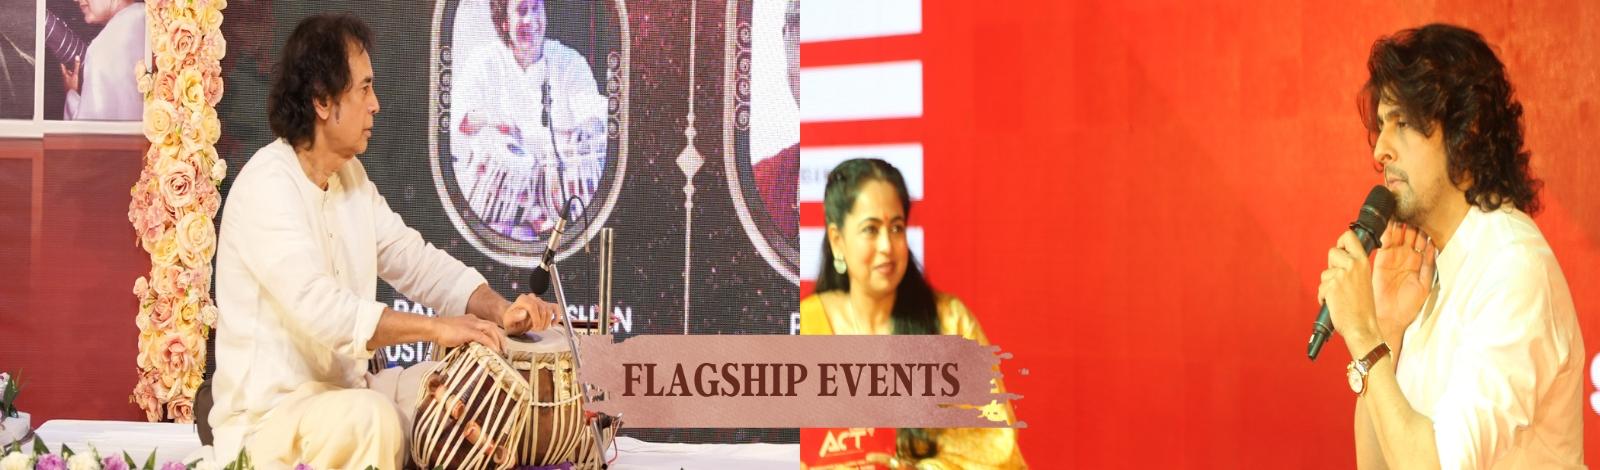 FLAGSHIP EVENTS Ajivasan Music and Dance Academy